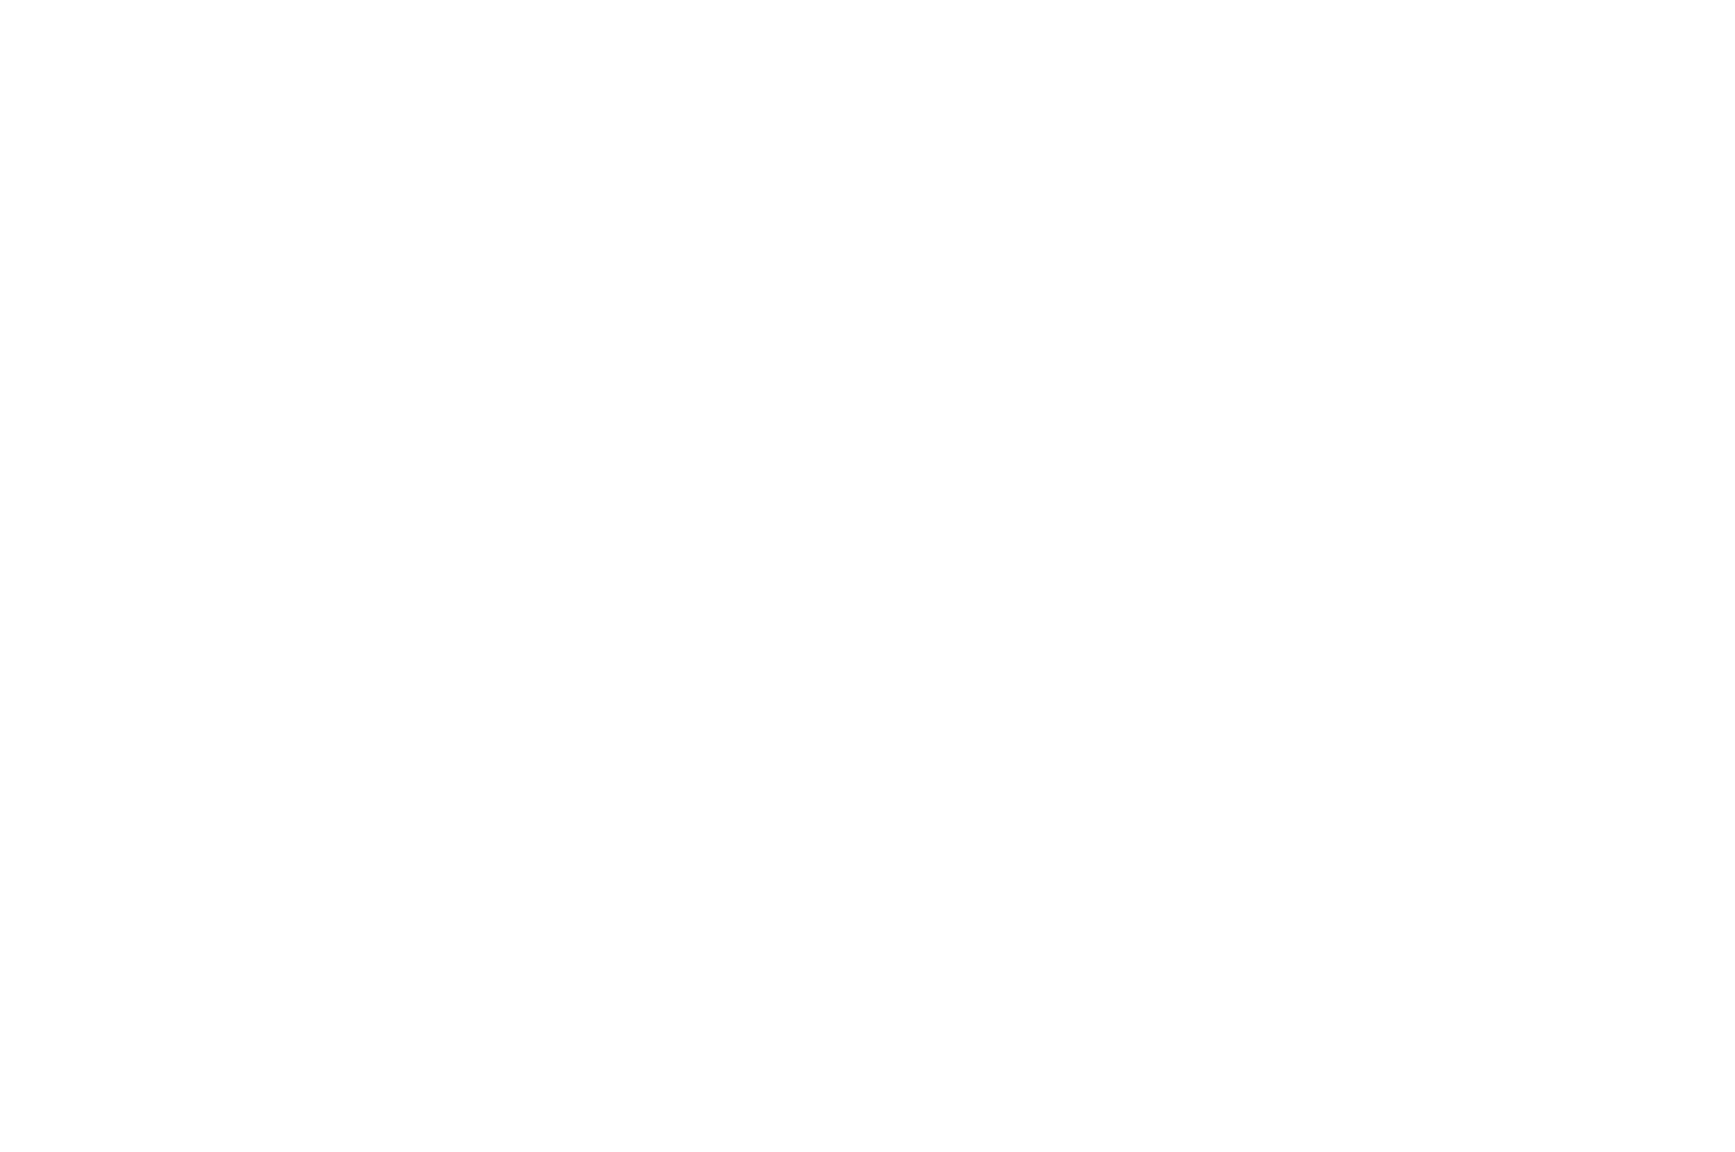 BEST MUSIC VIDEO - American Golden Picture International Film Festival - 2021